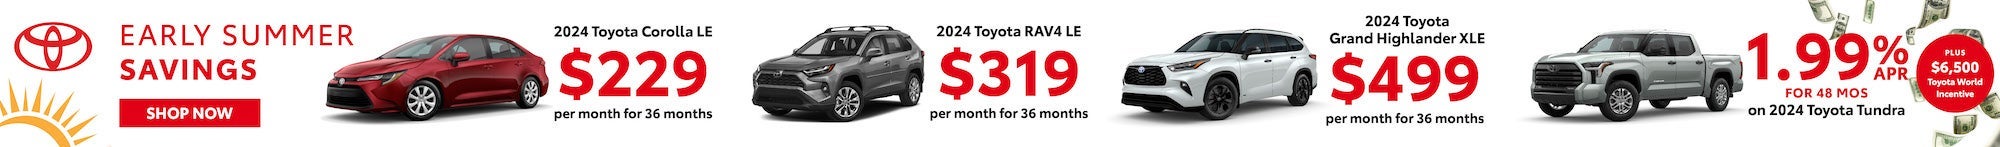 Toyota World of Lakewood April 24 Lease Banner Desktop